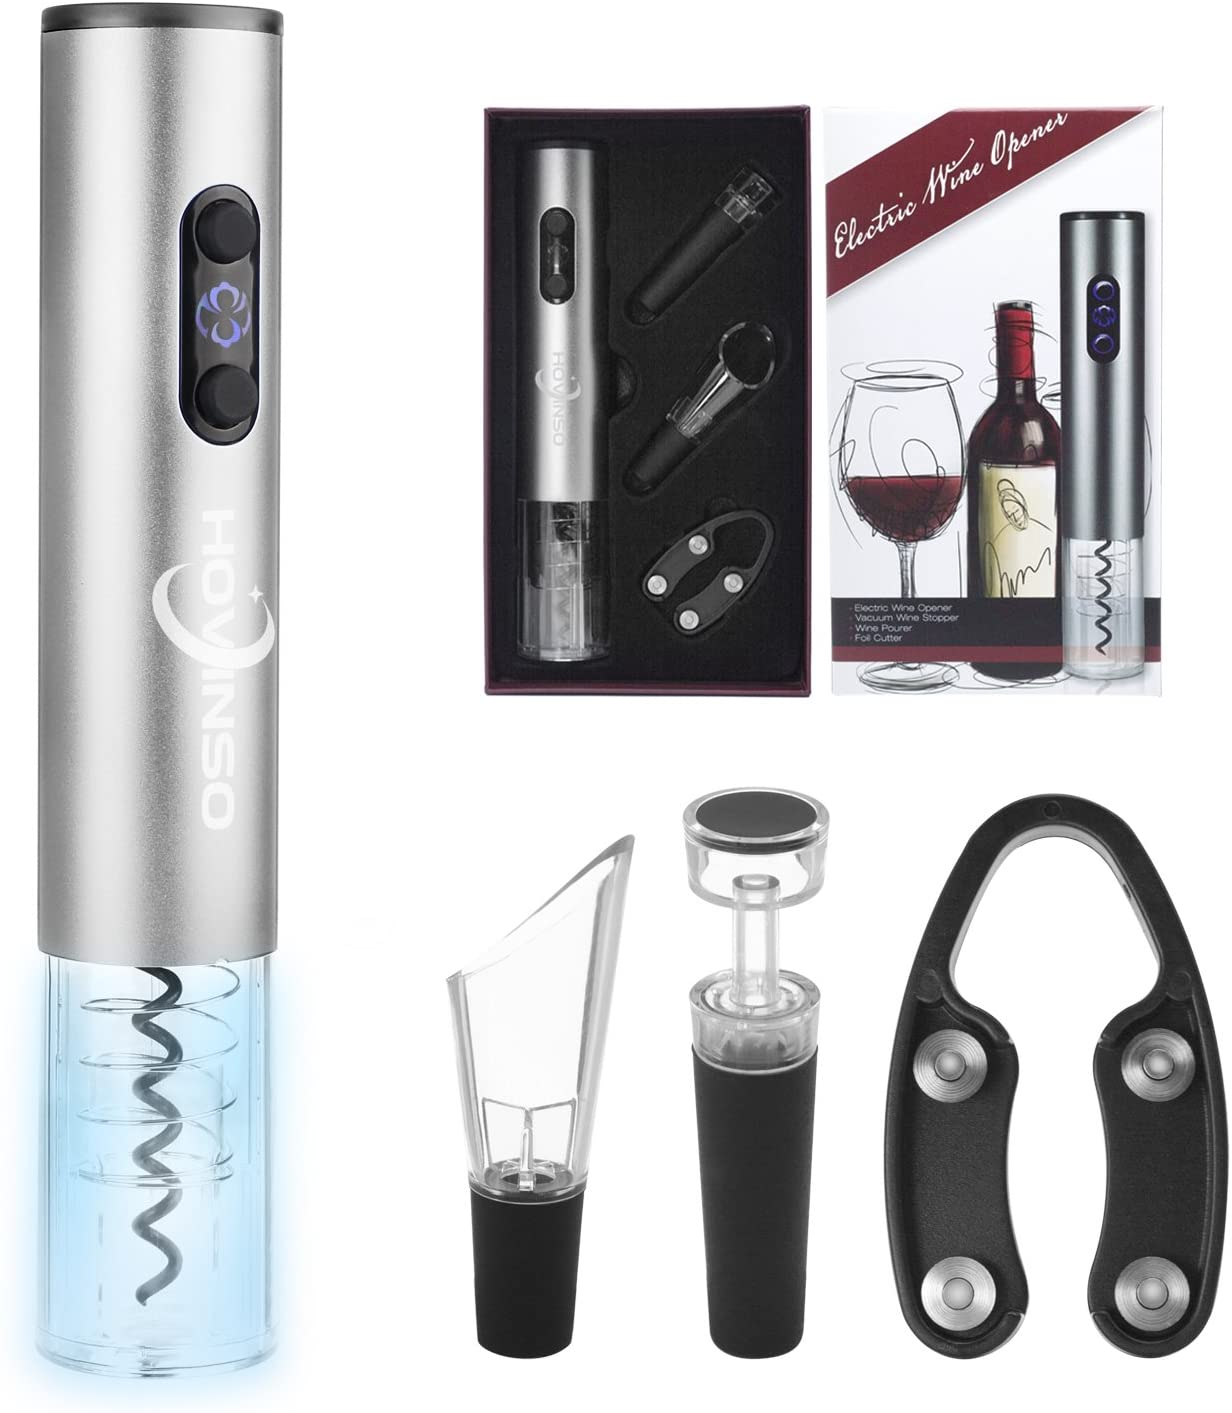 Smart Electric Wine Opener Kit - Rarefinda.com